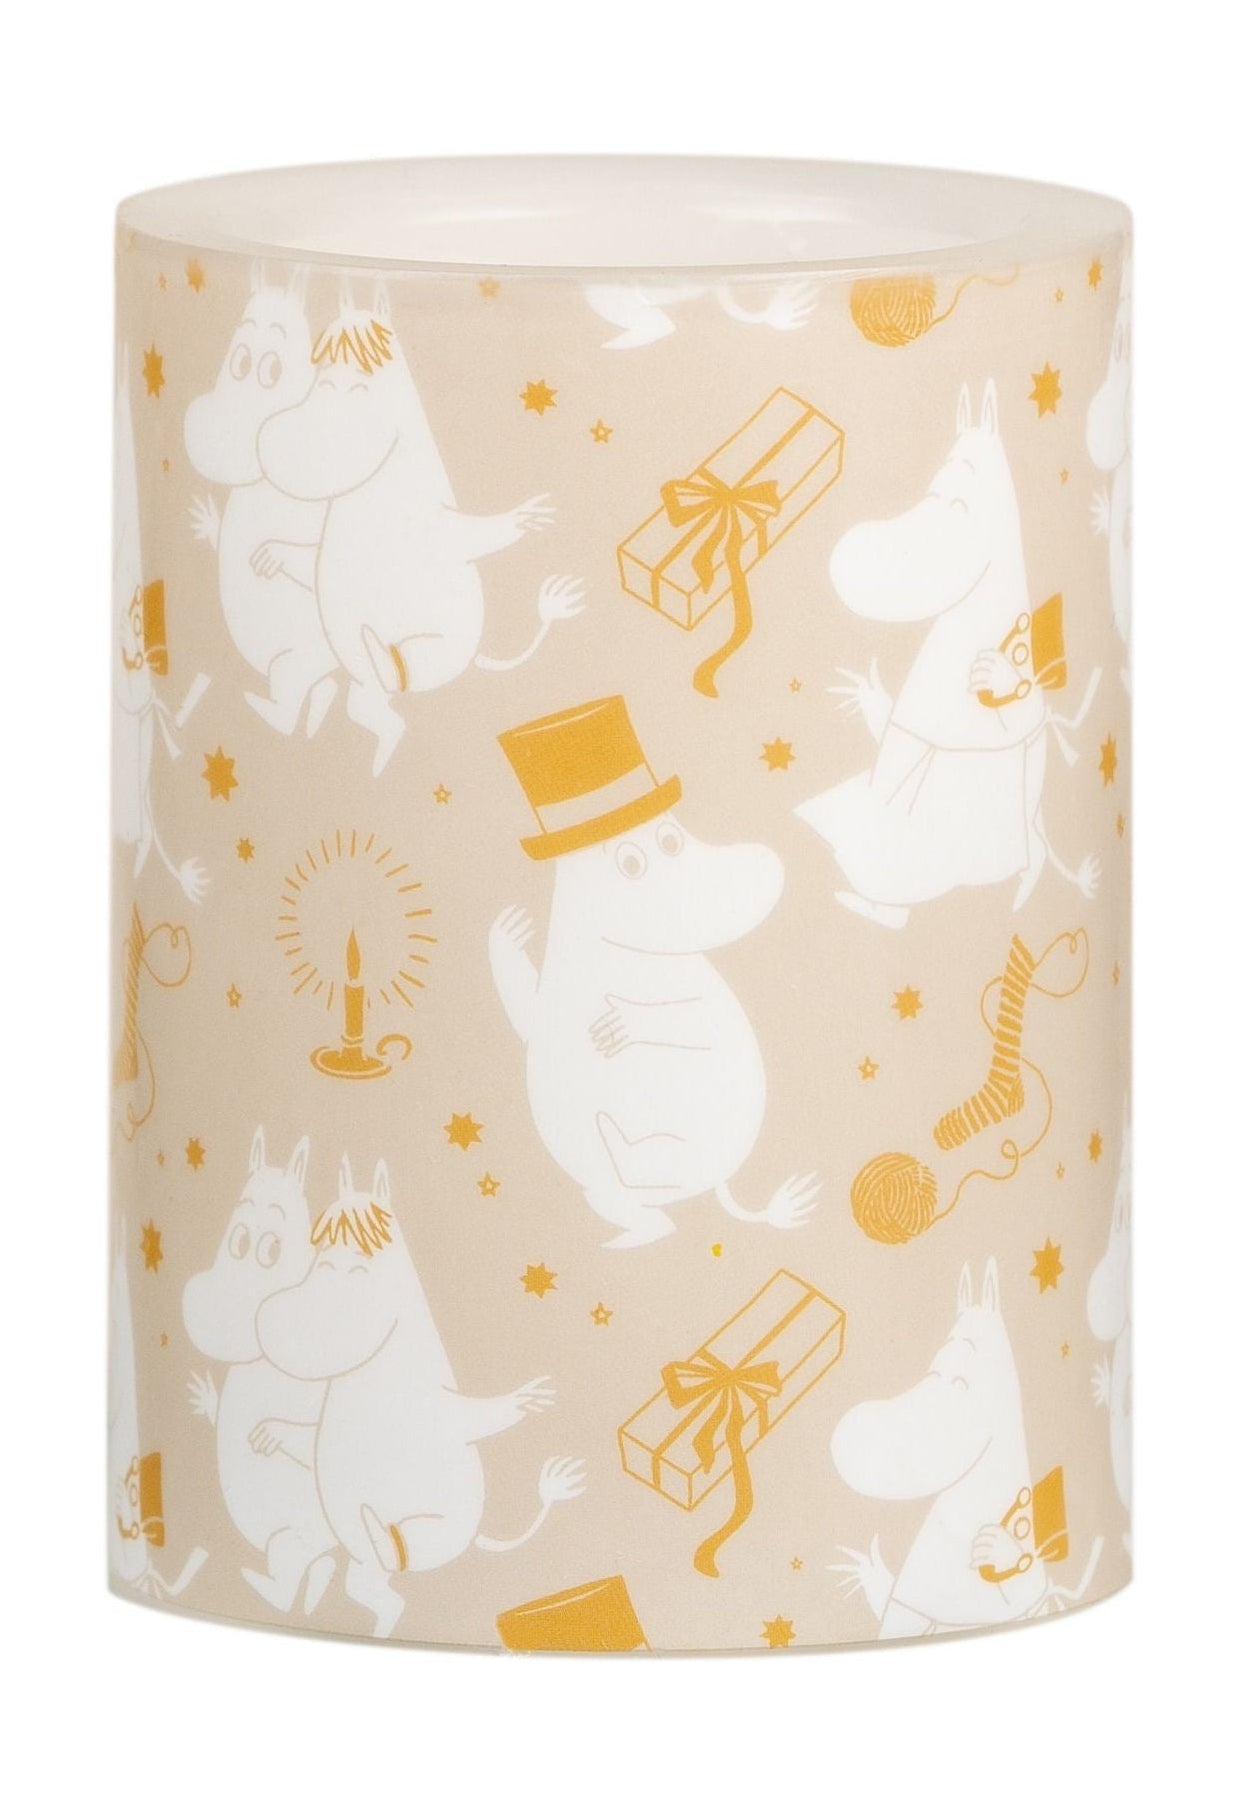 Muurla Moomin LED Candle étoiles scintillantes